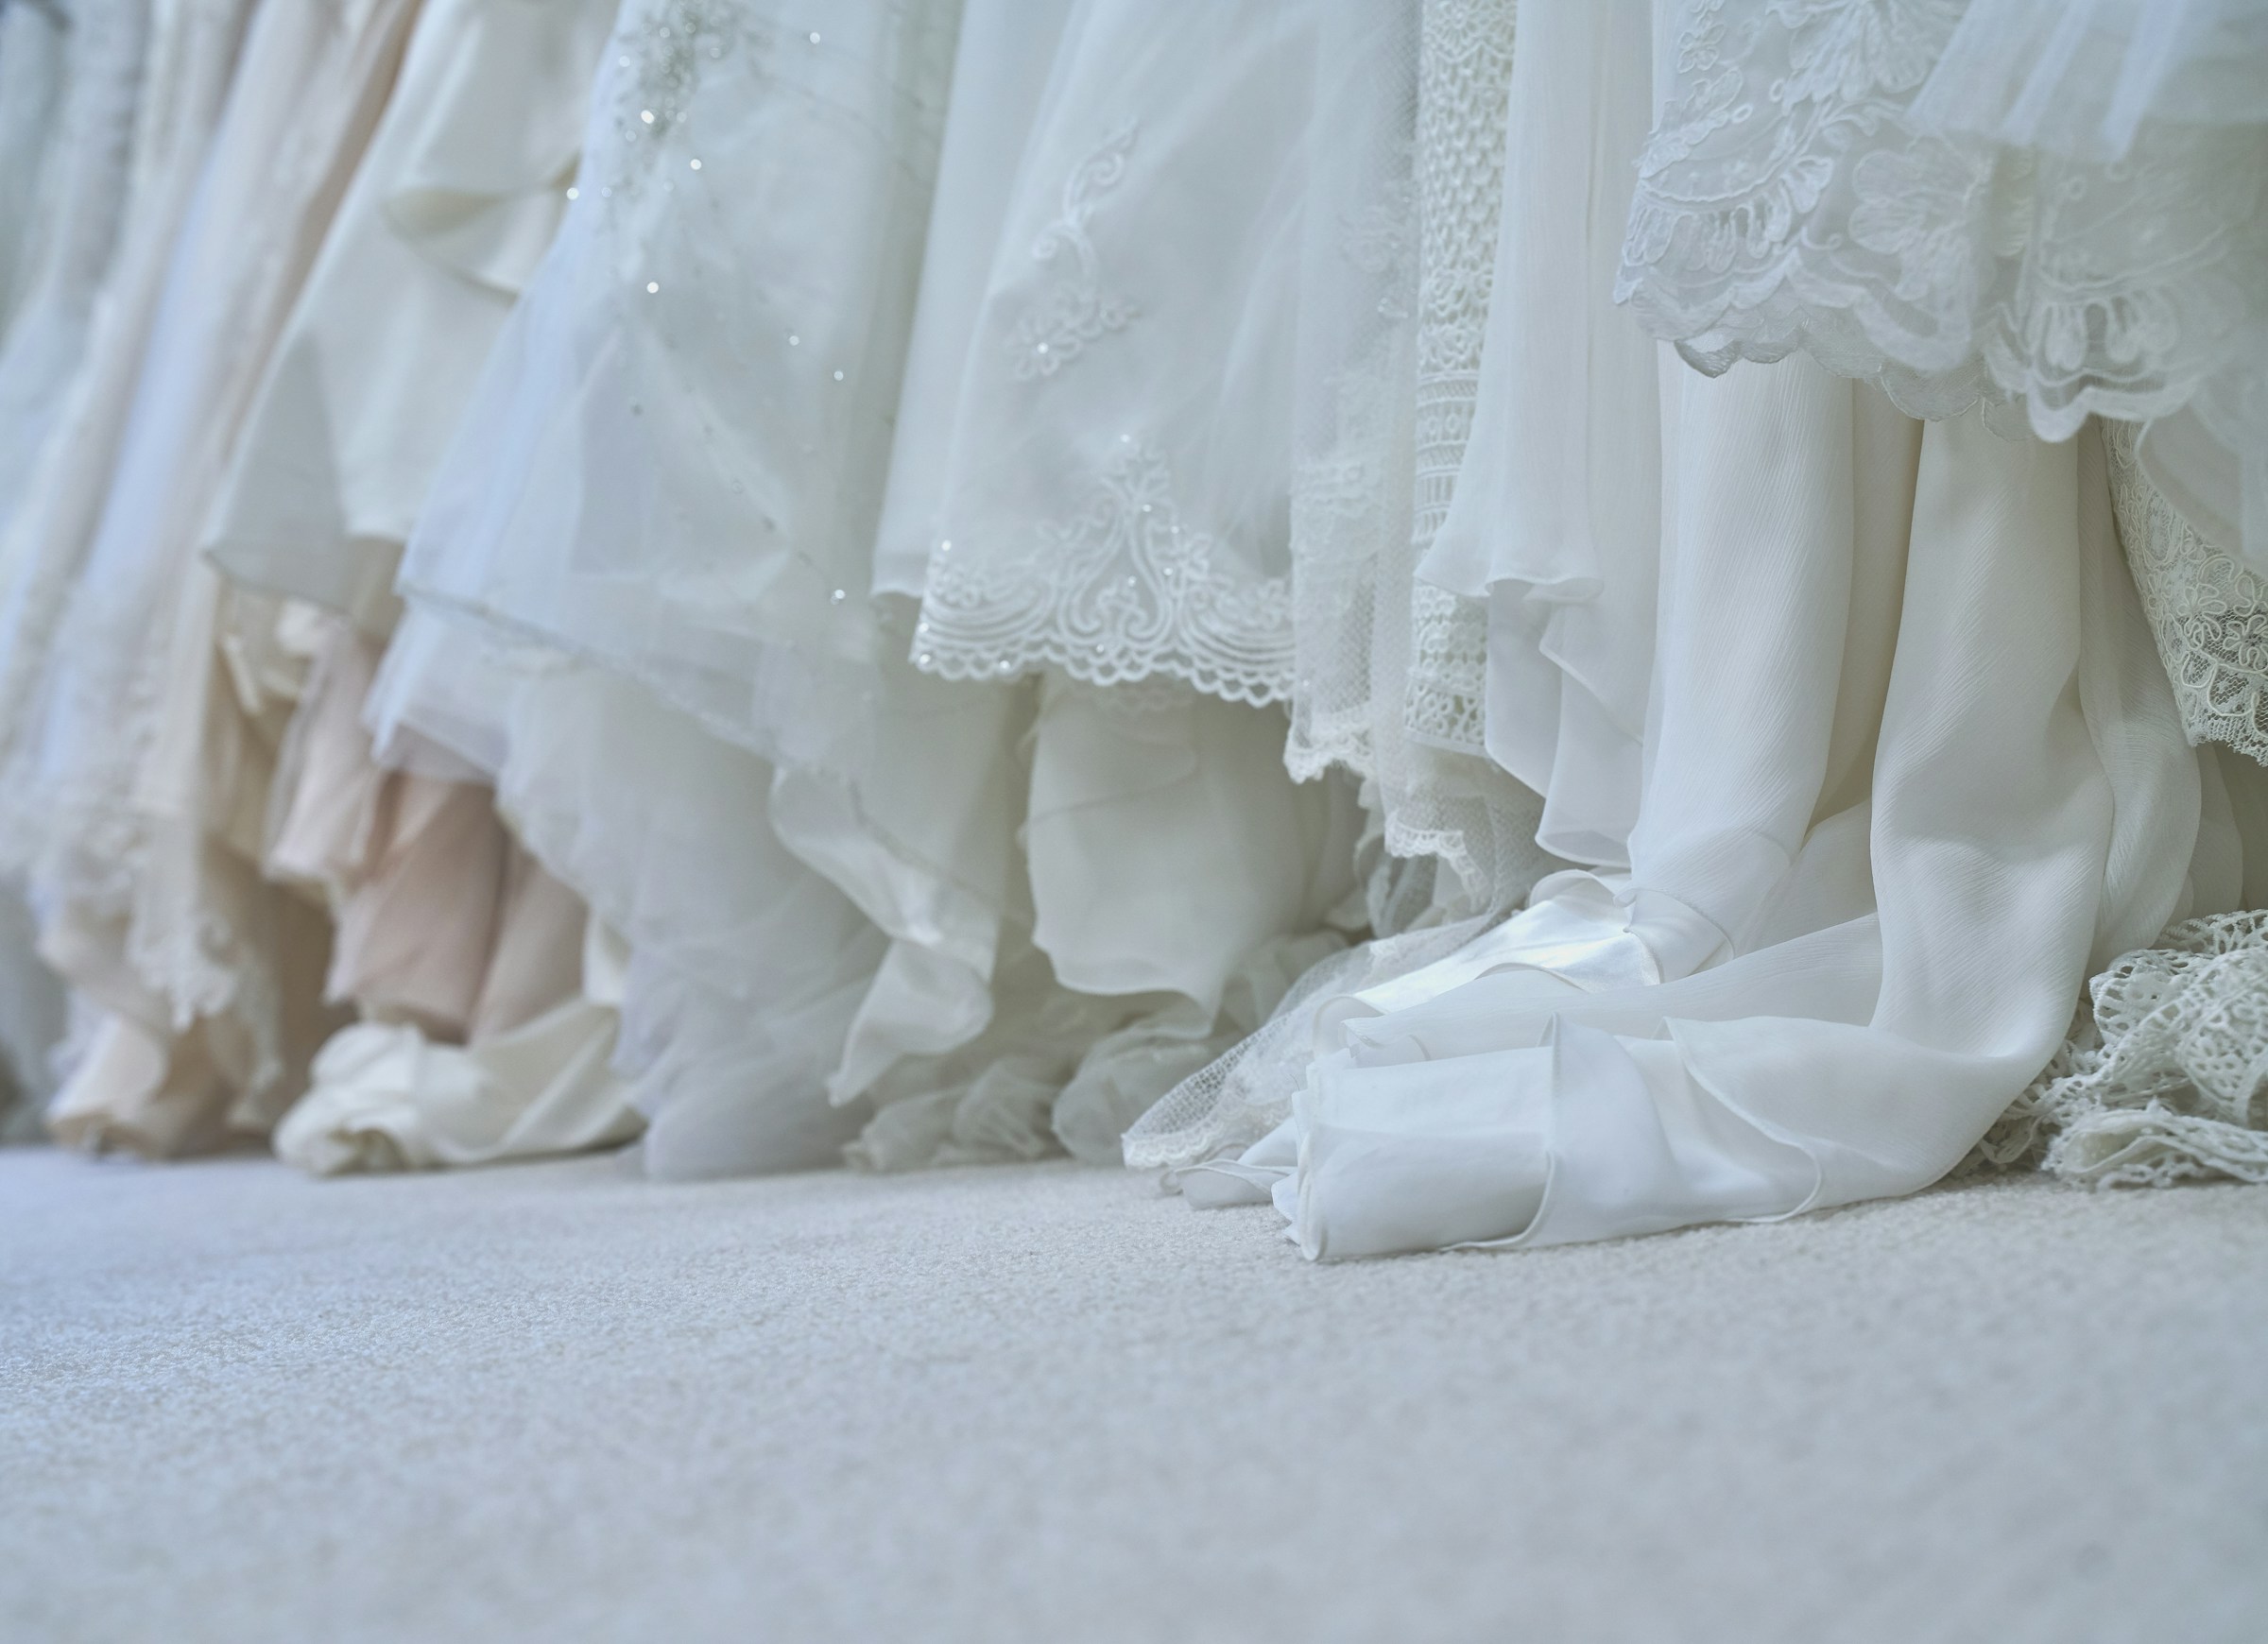 Different wedding dresses | Source: Unsplash